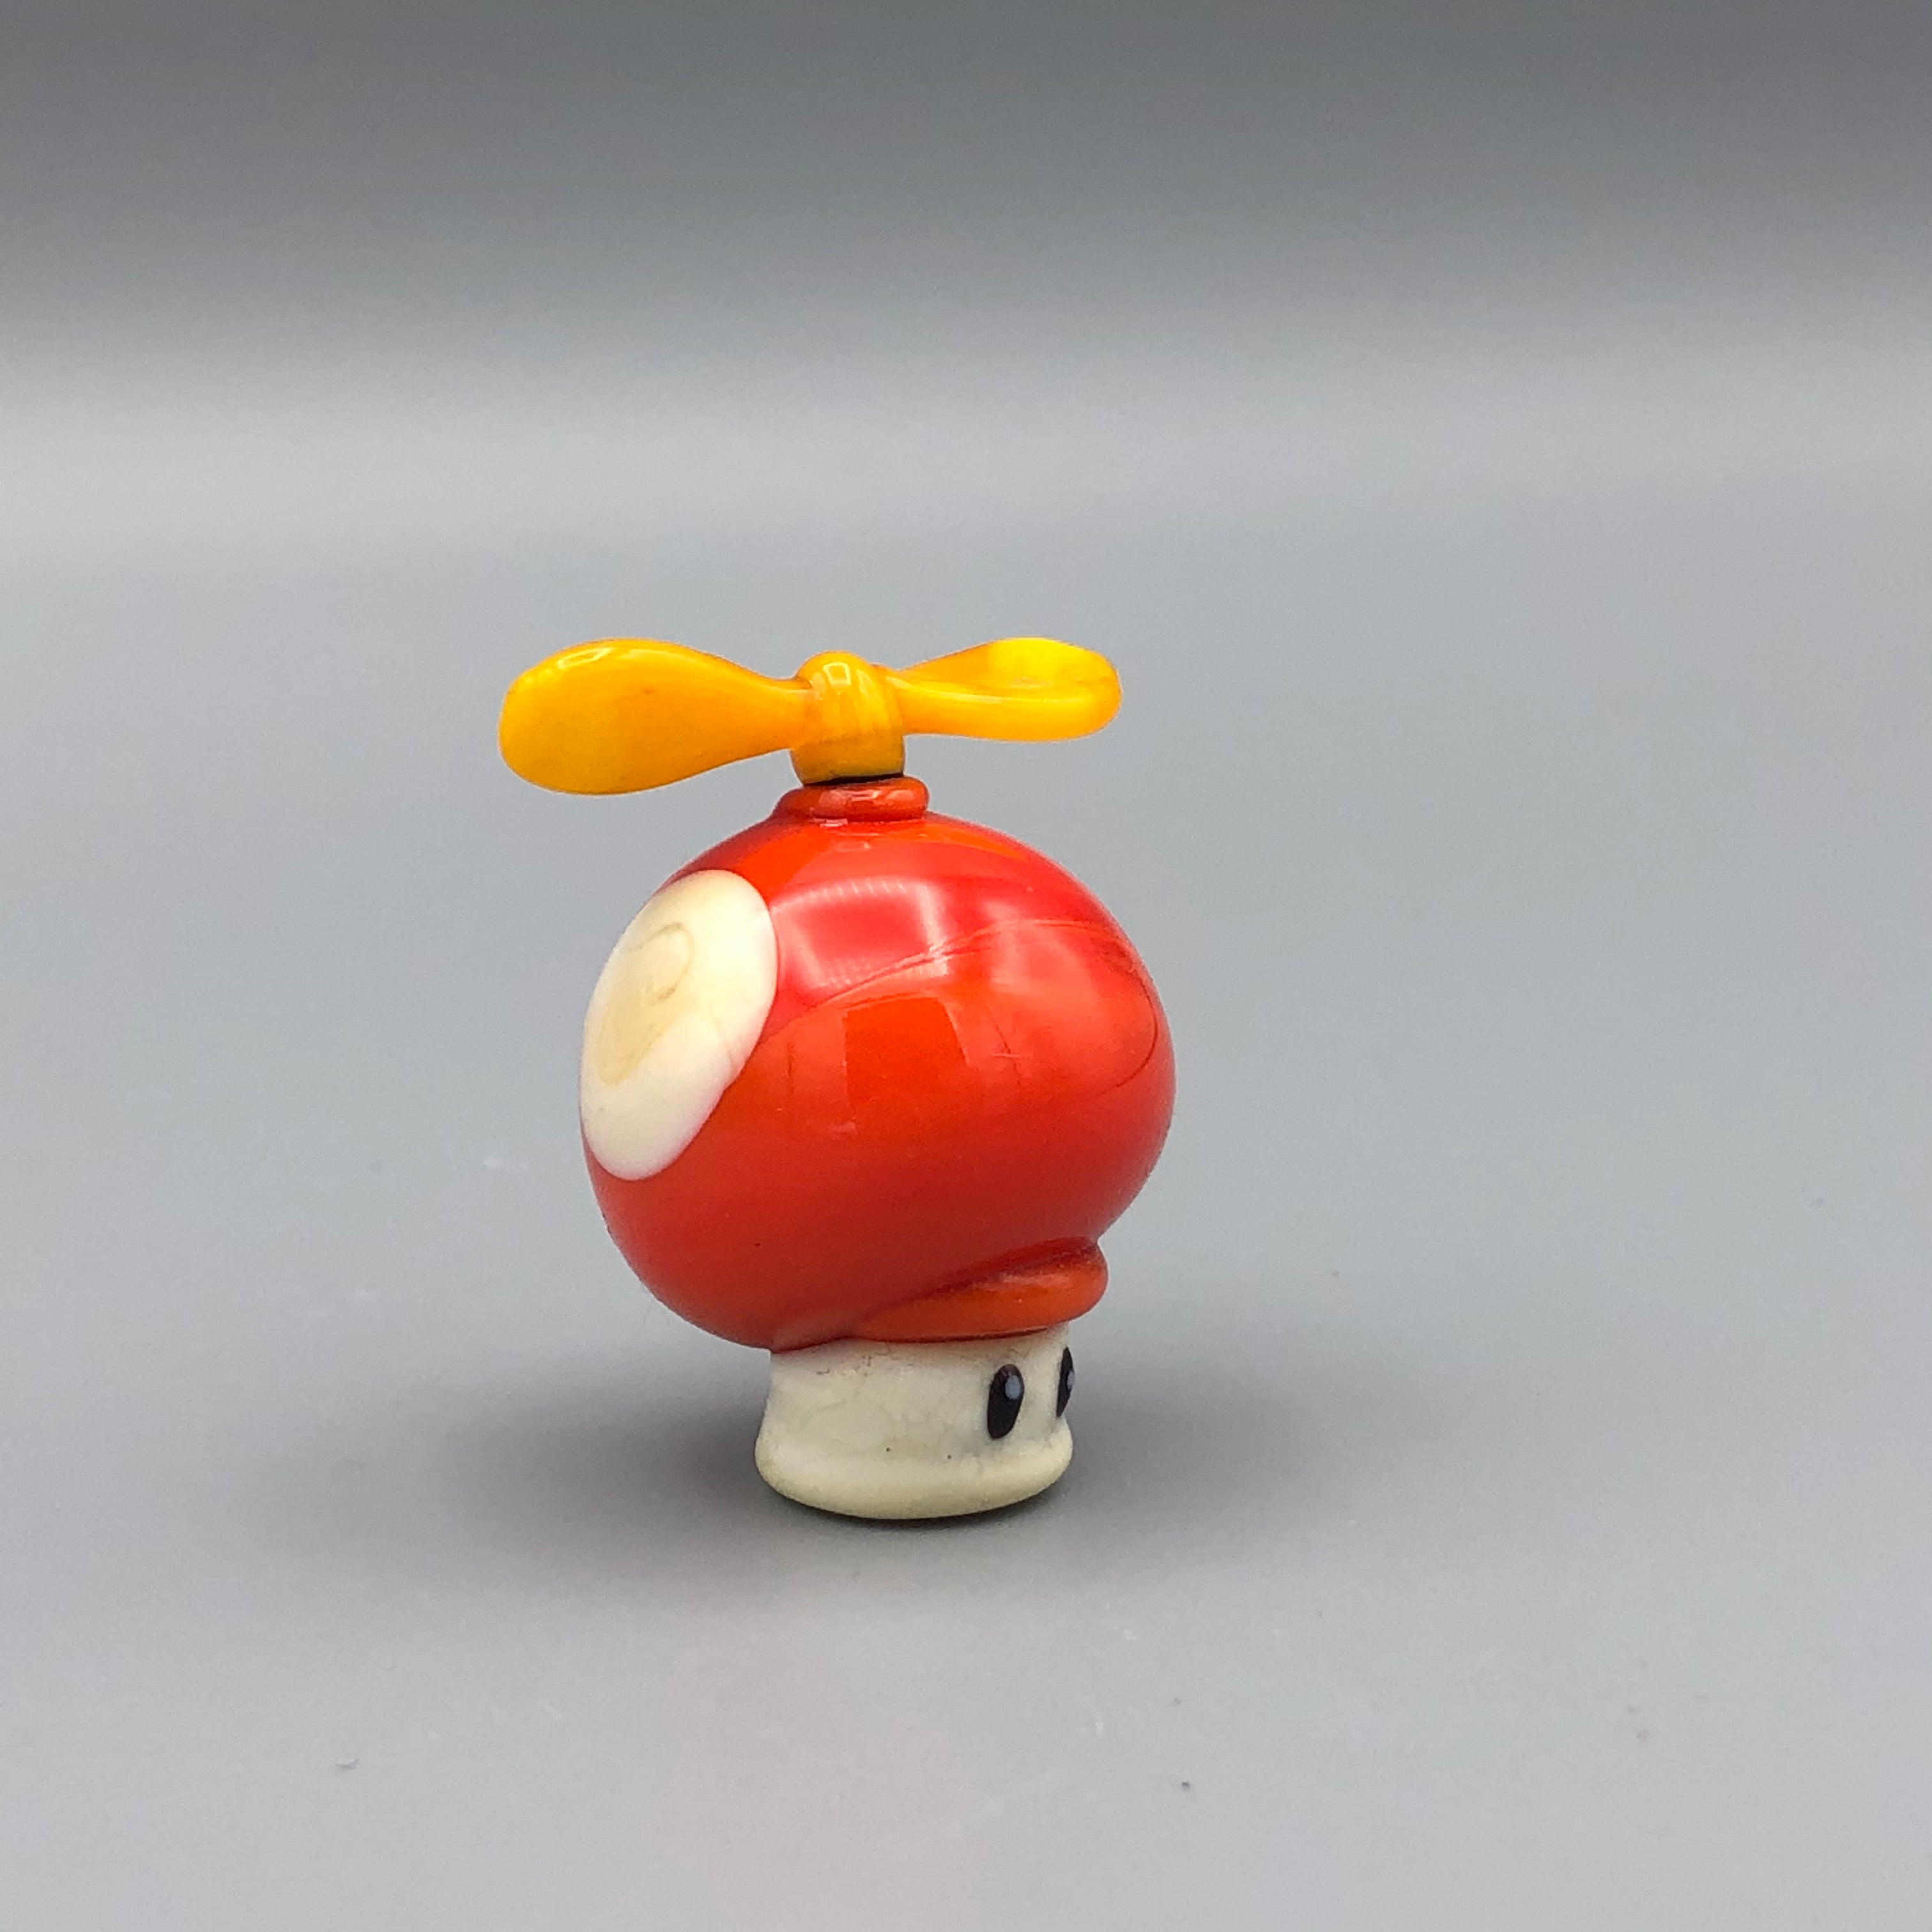 Figura de Cristal Propeller Musroom Toad